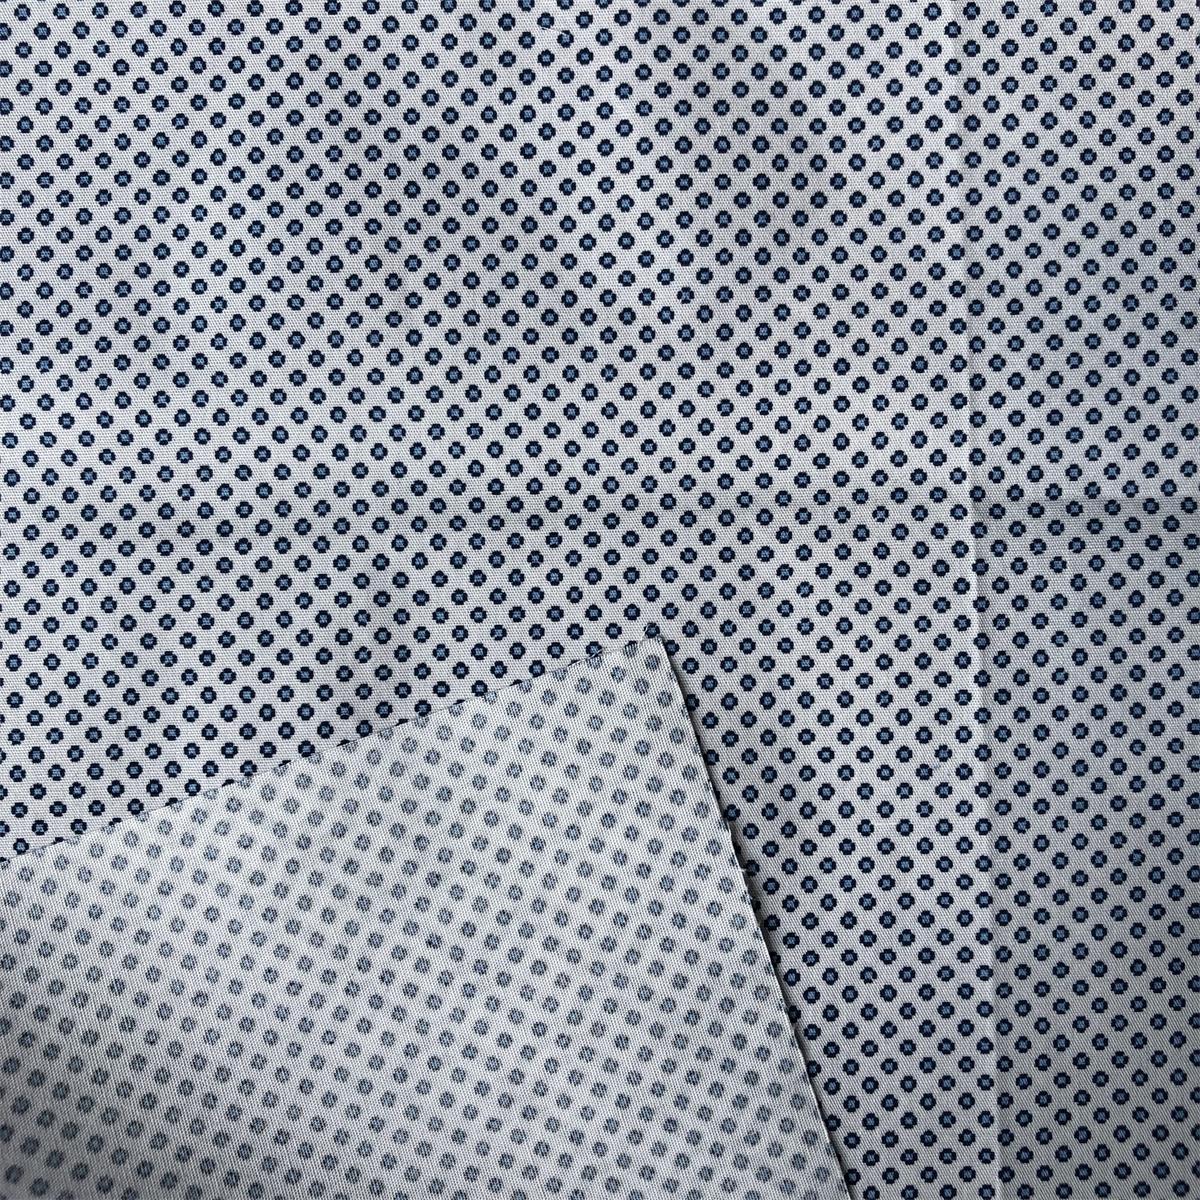 China Jiangsu Textile Cotton fabric for mens shirts 100 cotton poplin digital printed shirts fabric